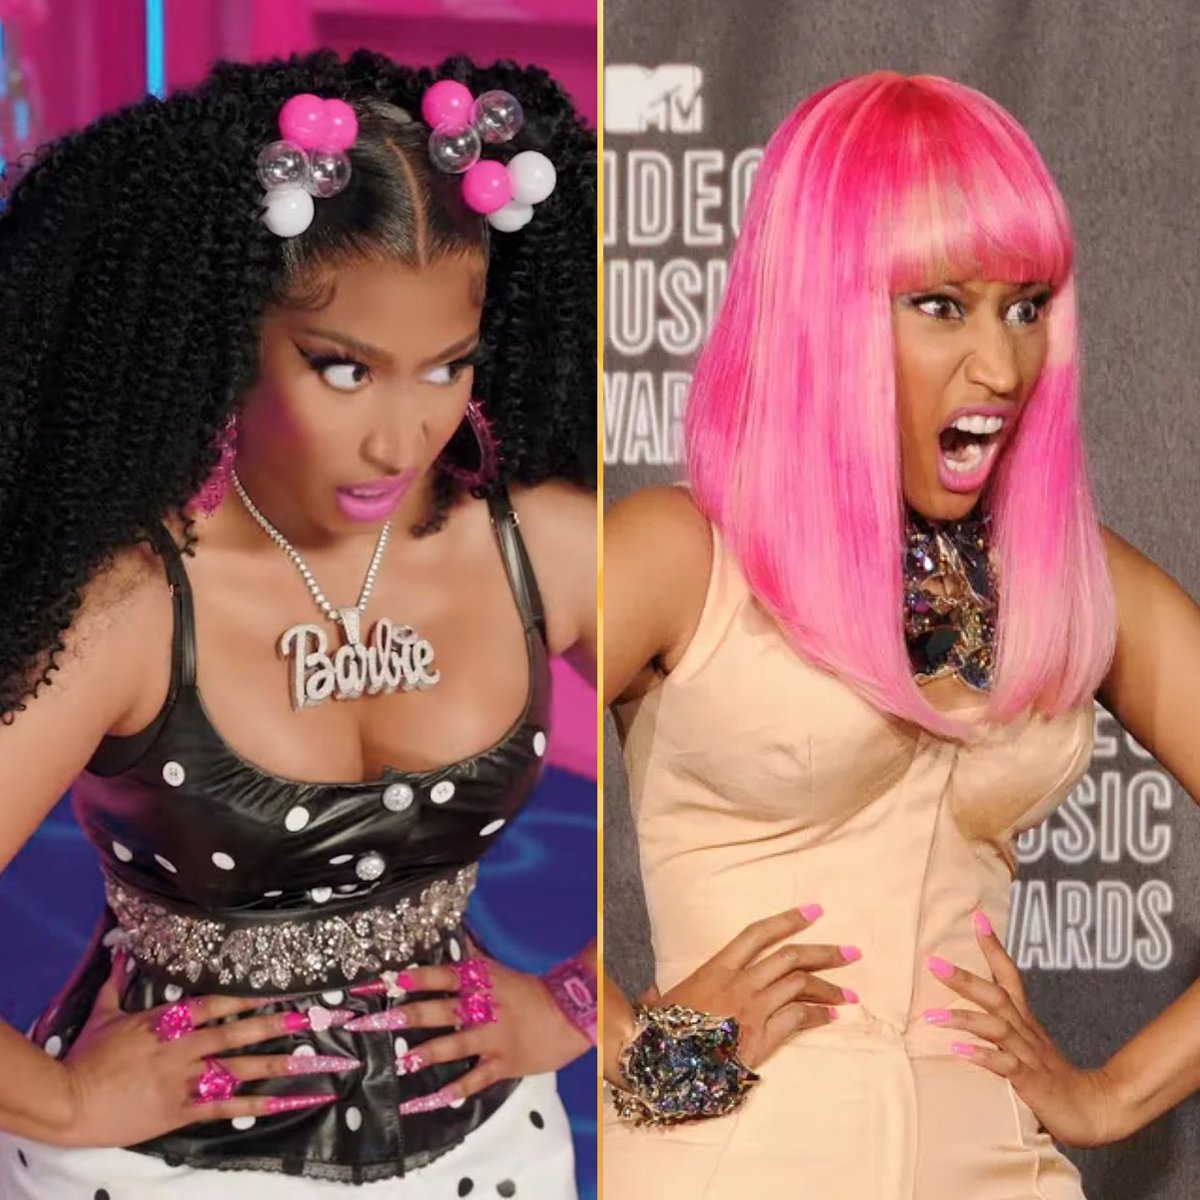 Nicki Minaj channels her alter-ego Roman in the “Barbie World” music video.